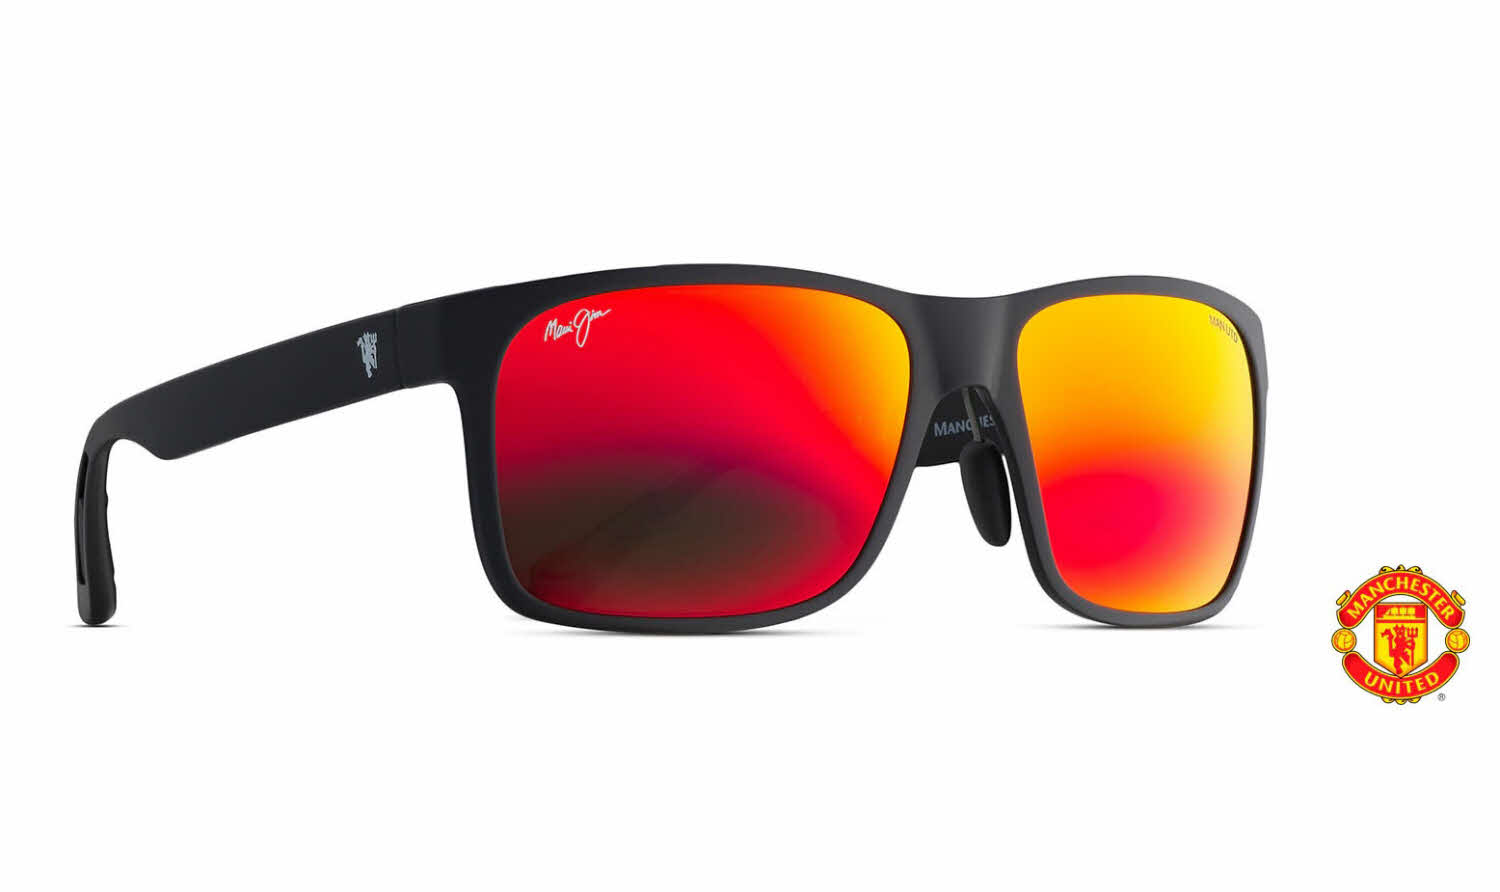 Maui Jim Red Sands Alternate Fit-432N Sunglasses